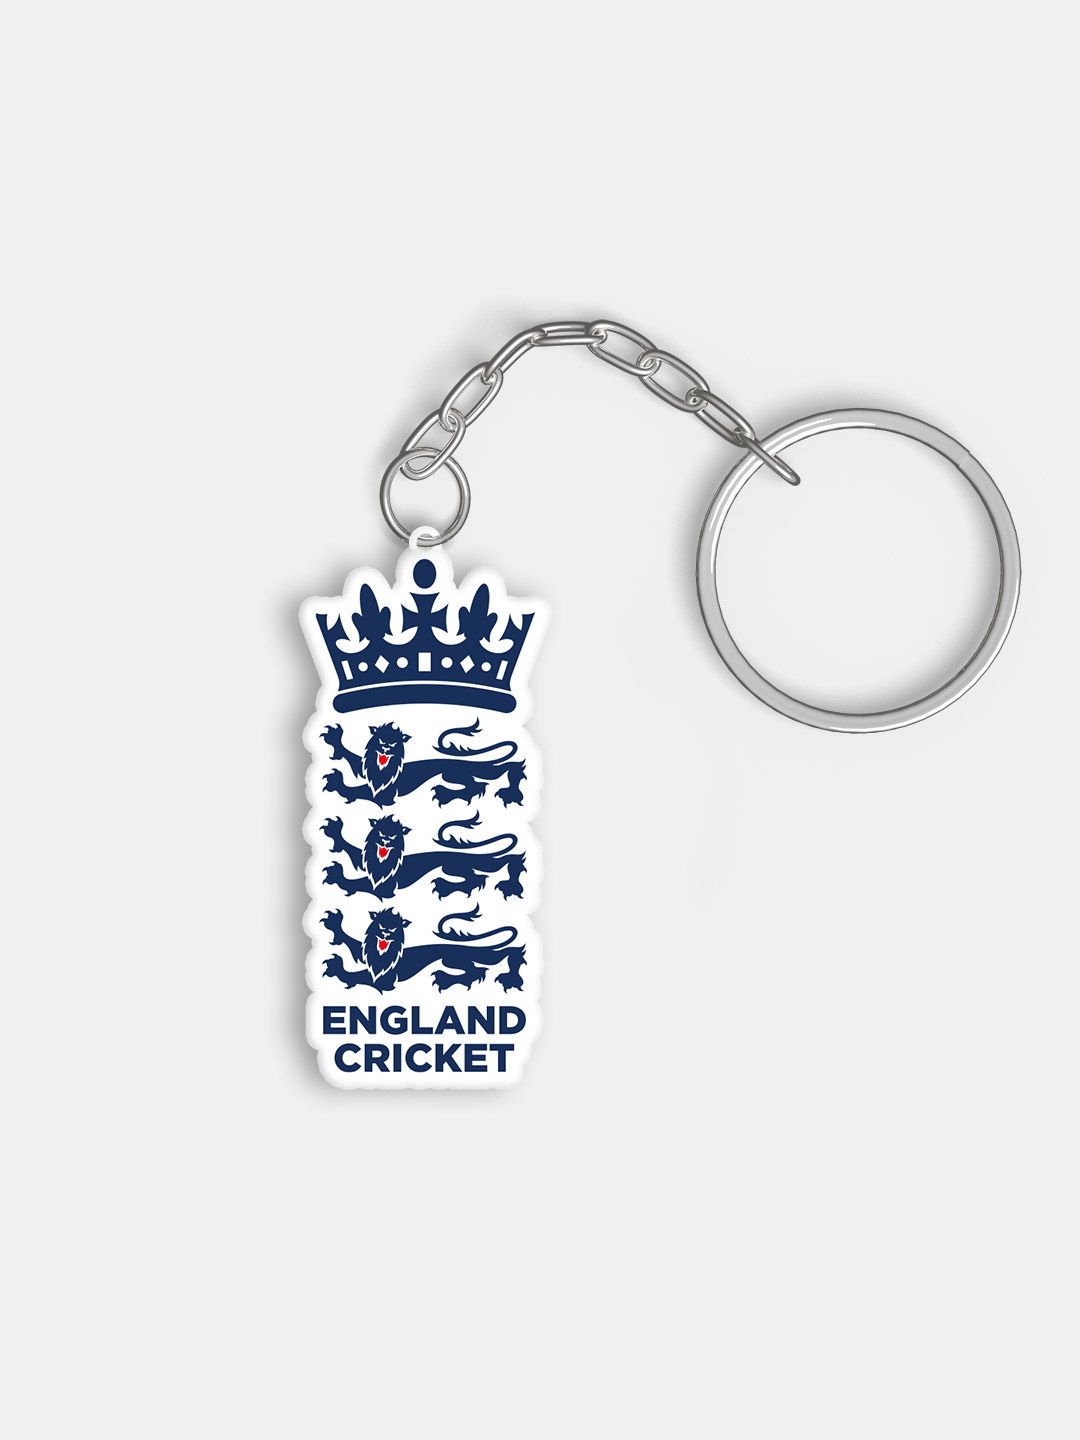 Cricket icons, England, England Cricket logo, png | PNGEgg